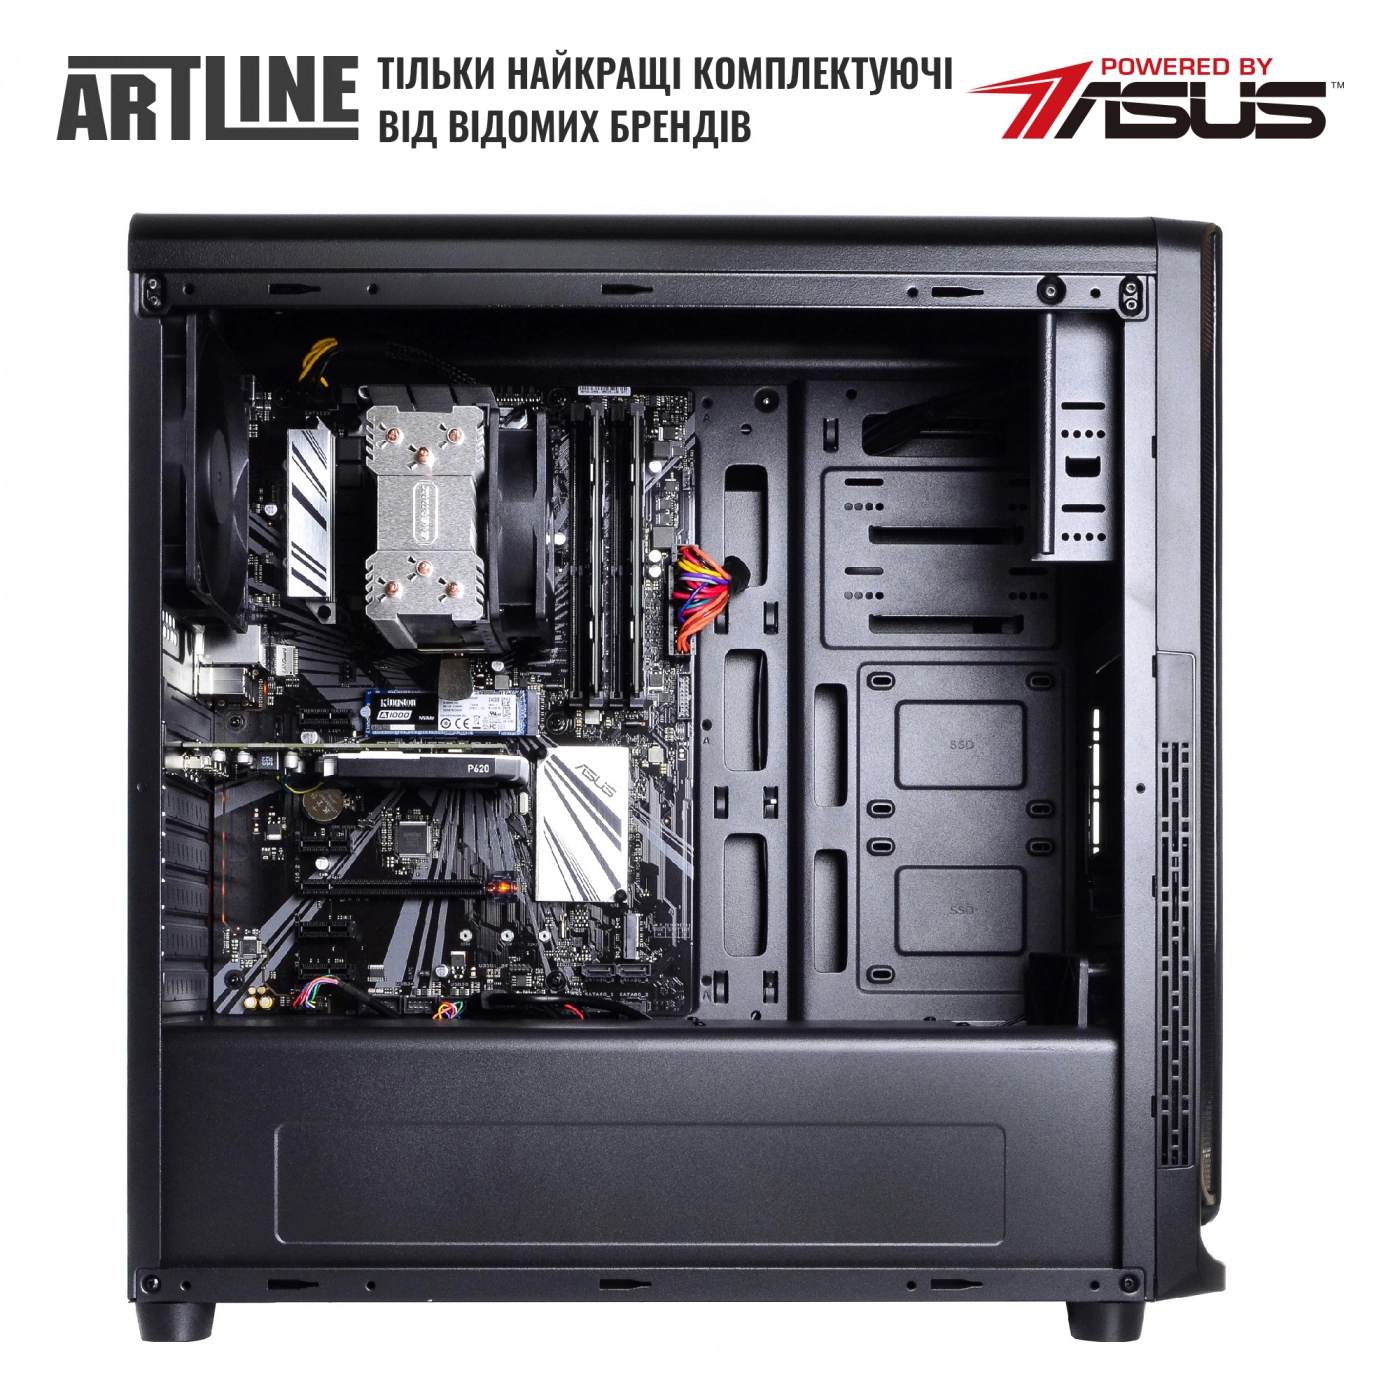 Купити Сервер ARTLINE Business T25v29 - фото 5